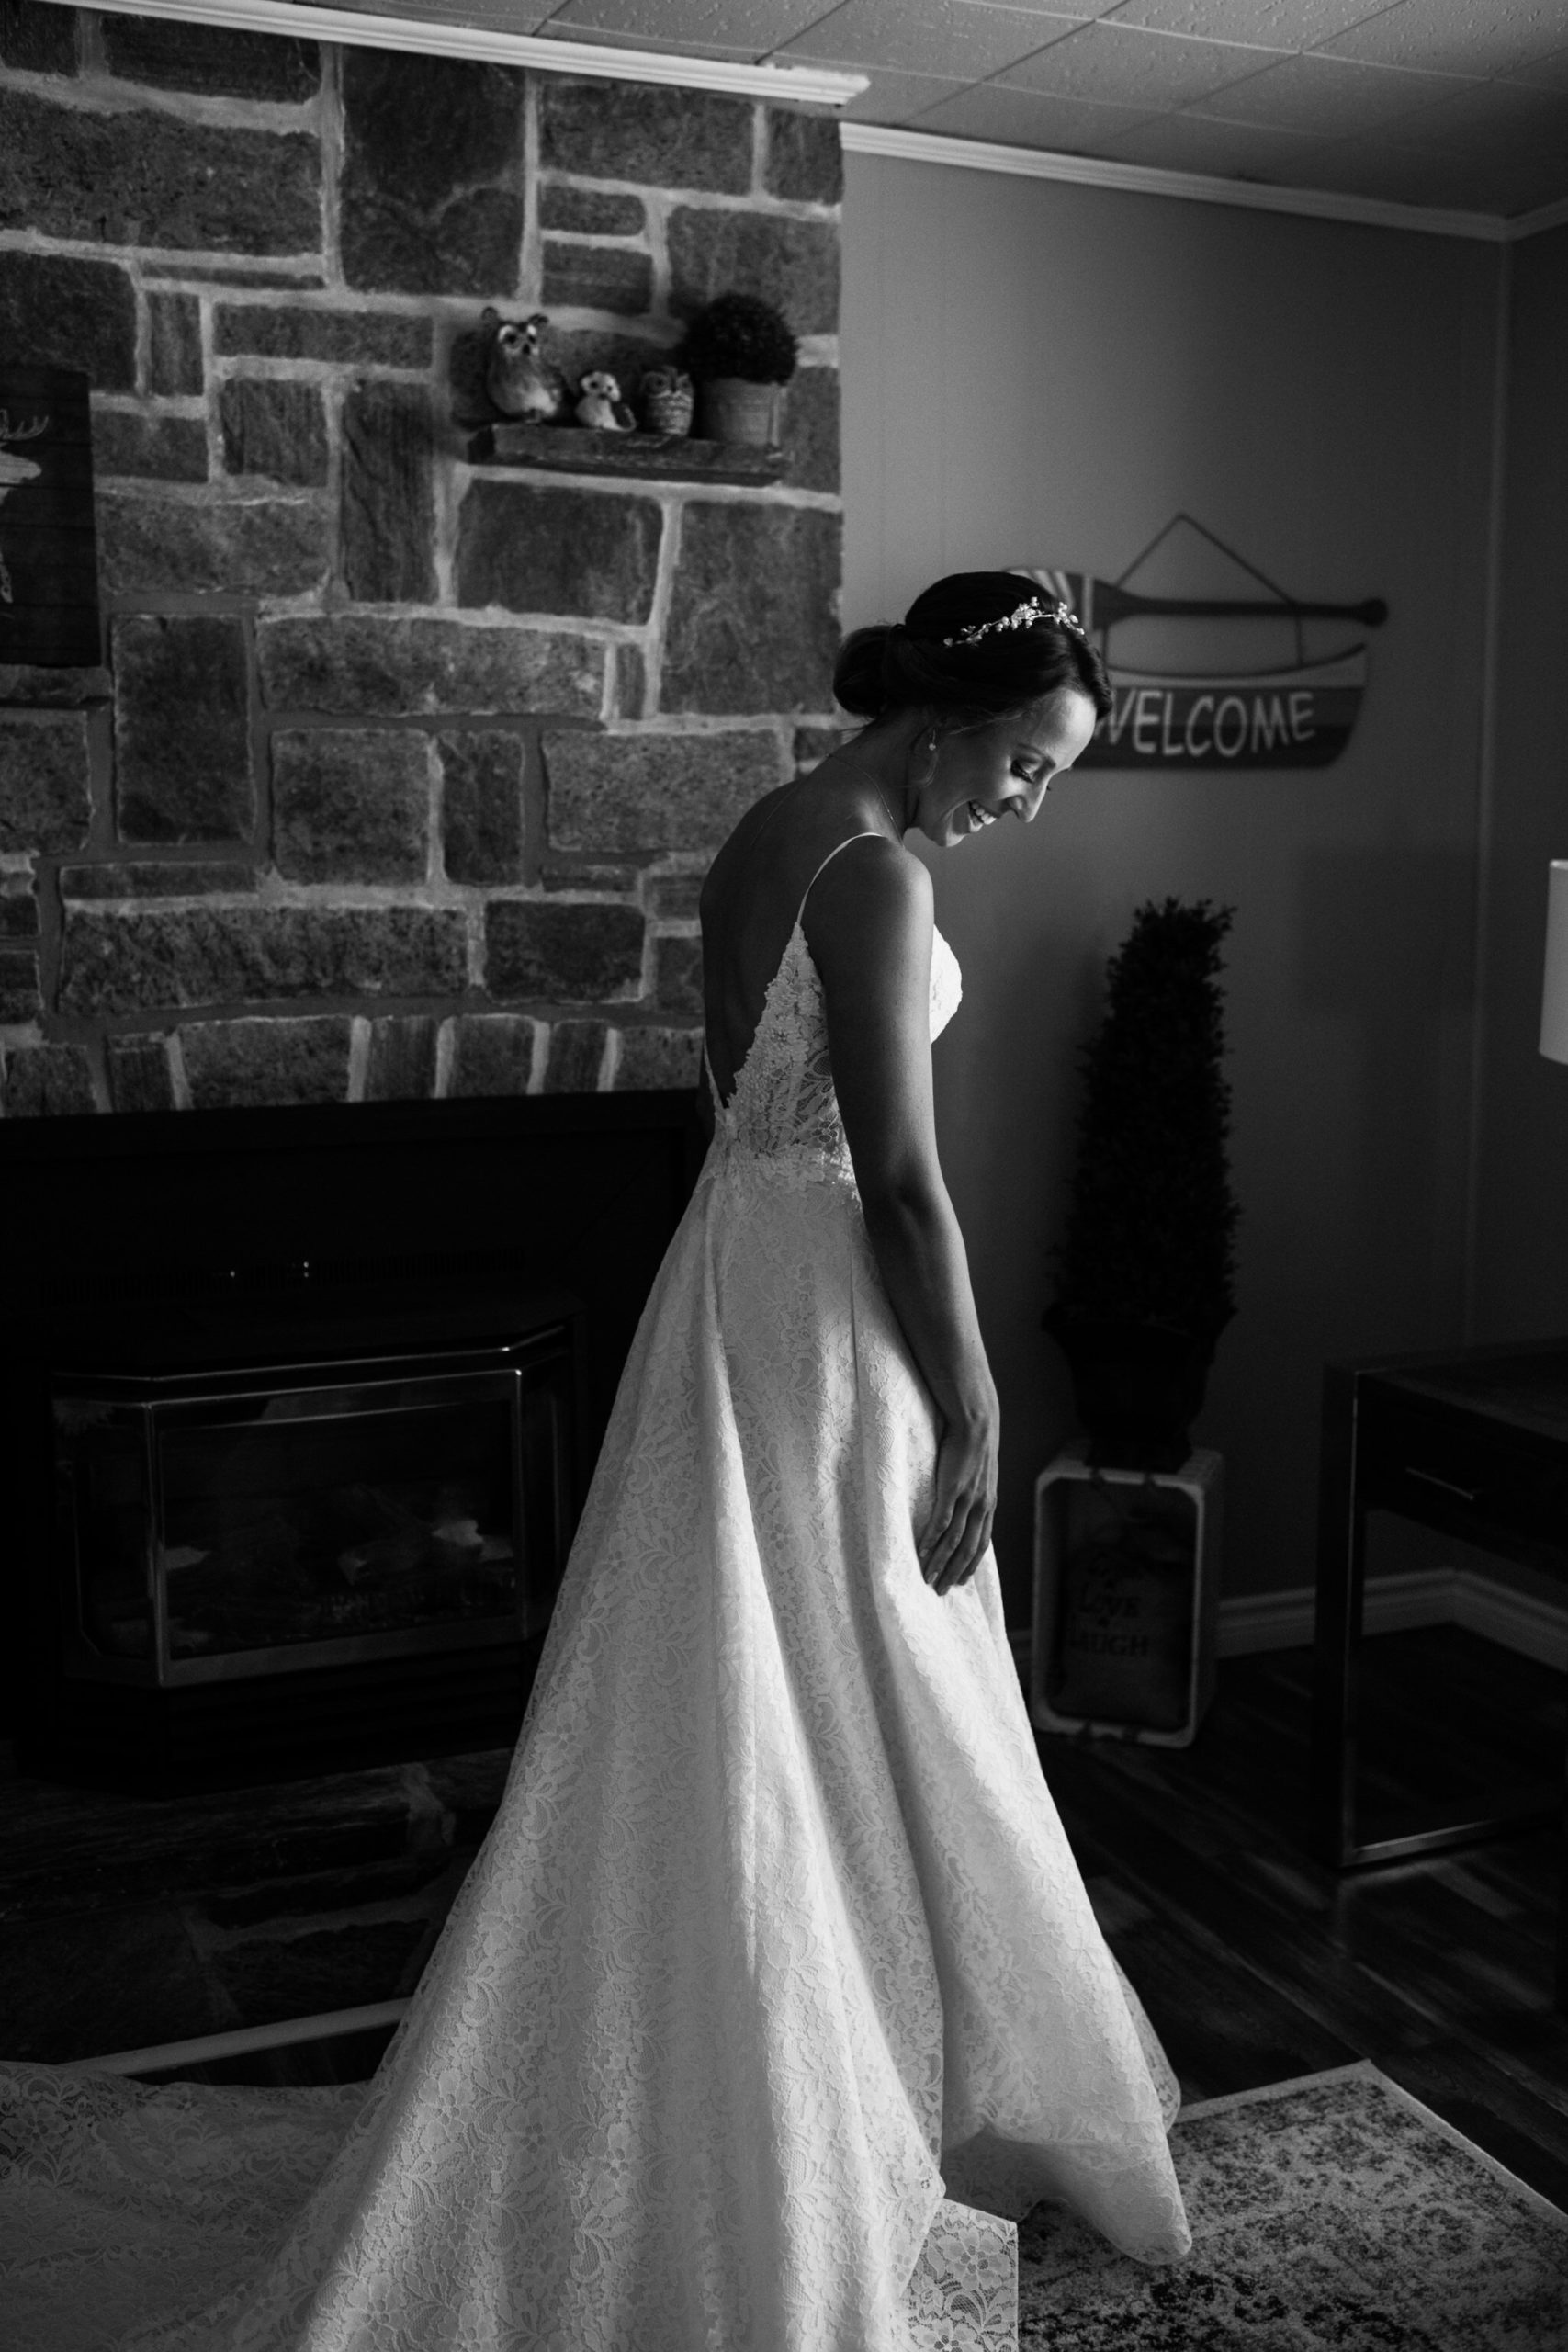 650-bride-getting-ready-cottage-otnario-toronto-wedding-black-white.jpg